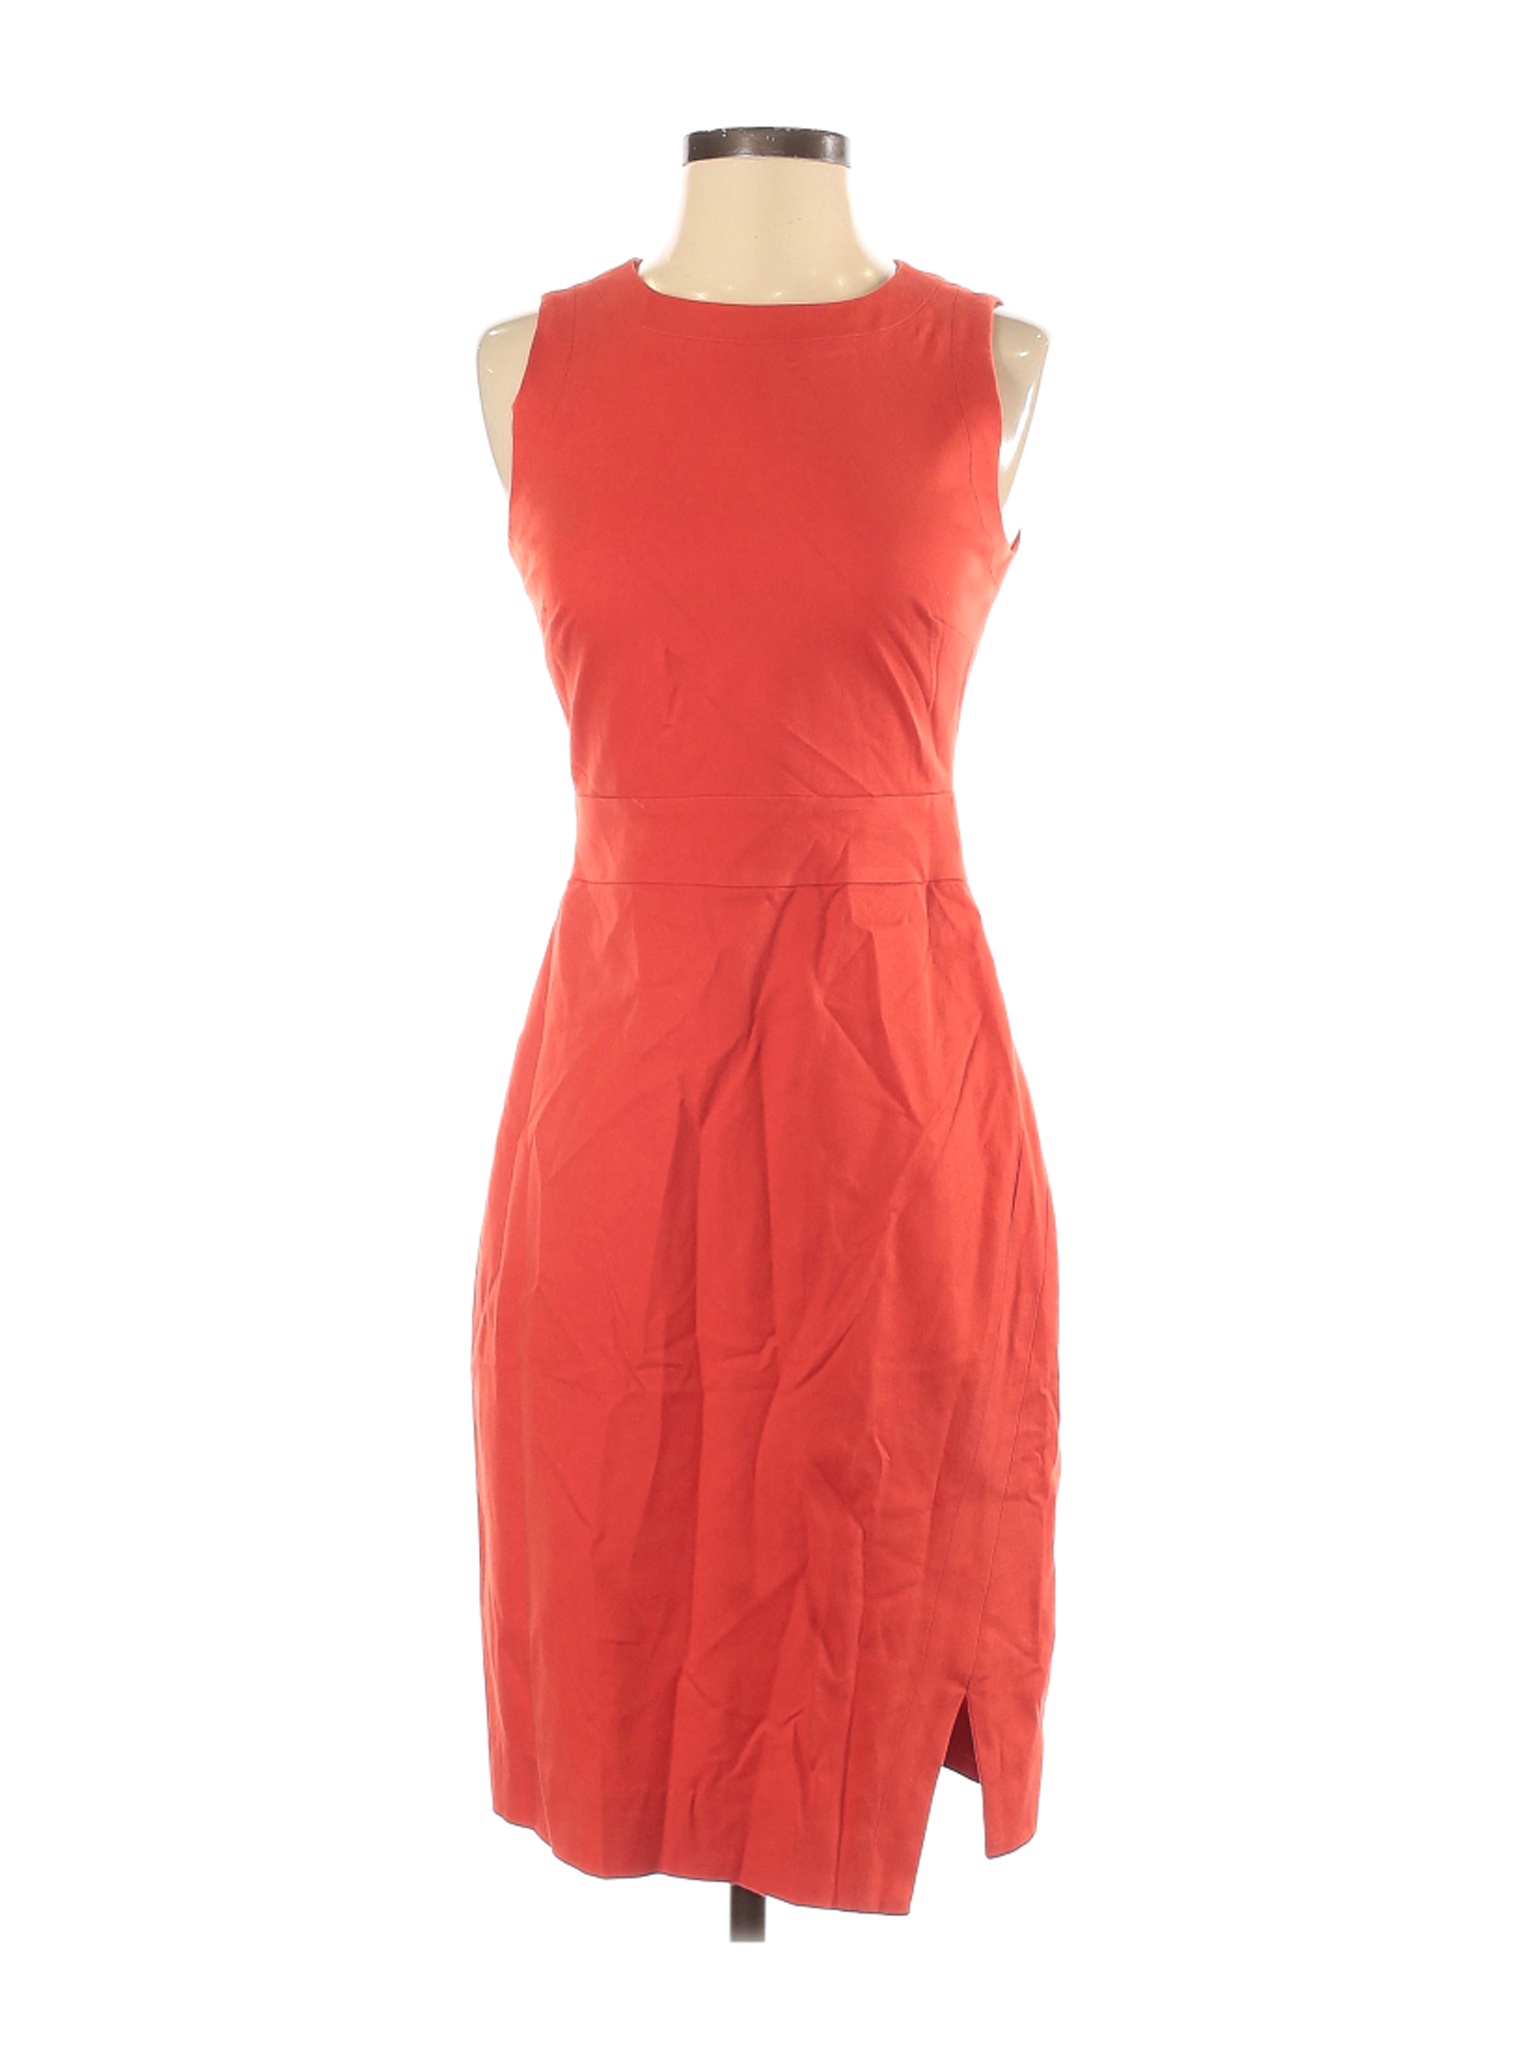 J.Crew Women Orange Casual Dress 2 | eBay